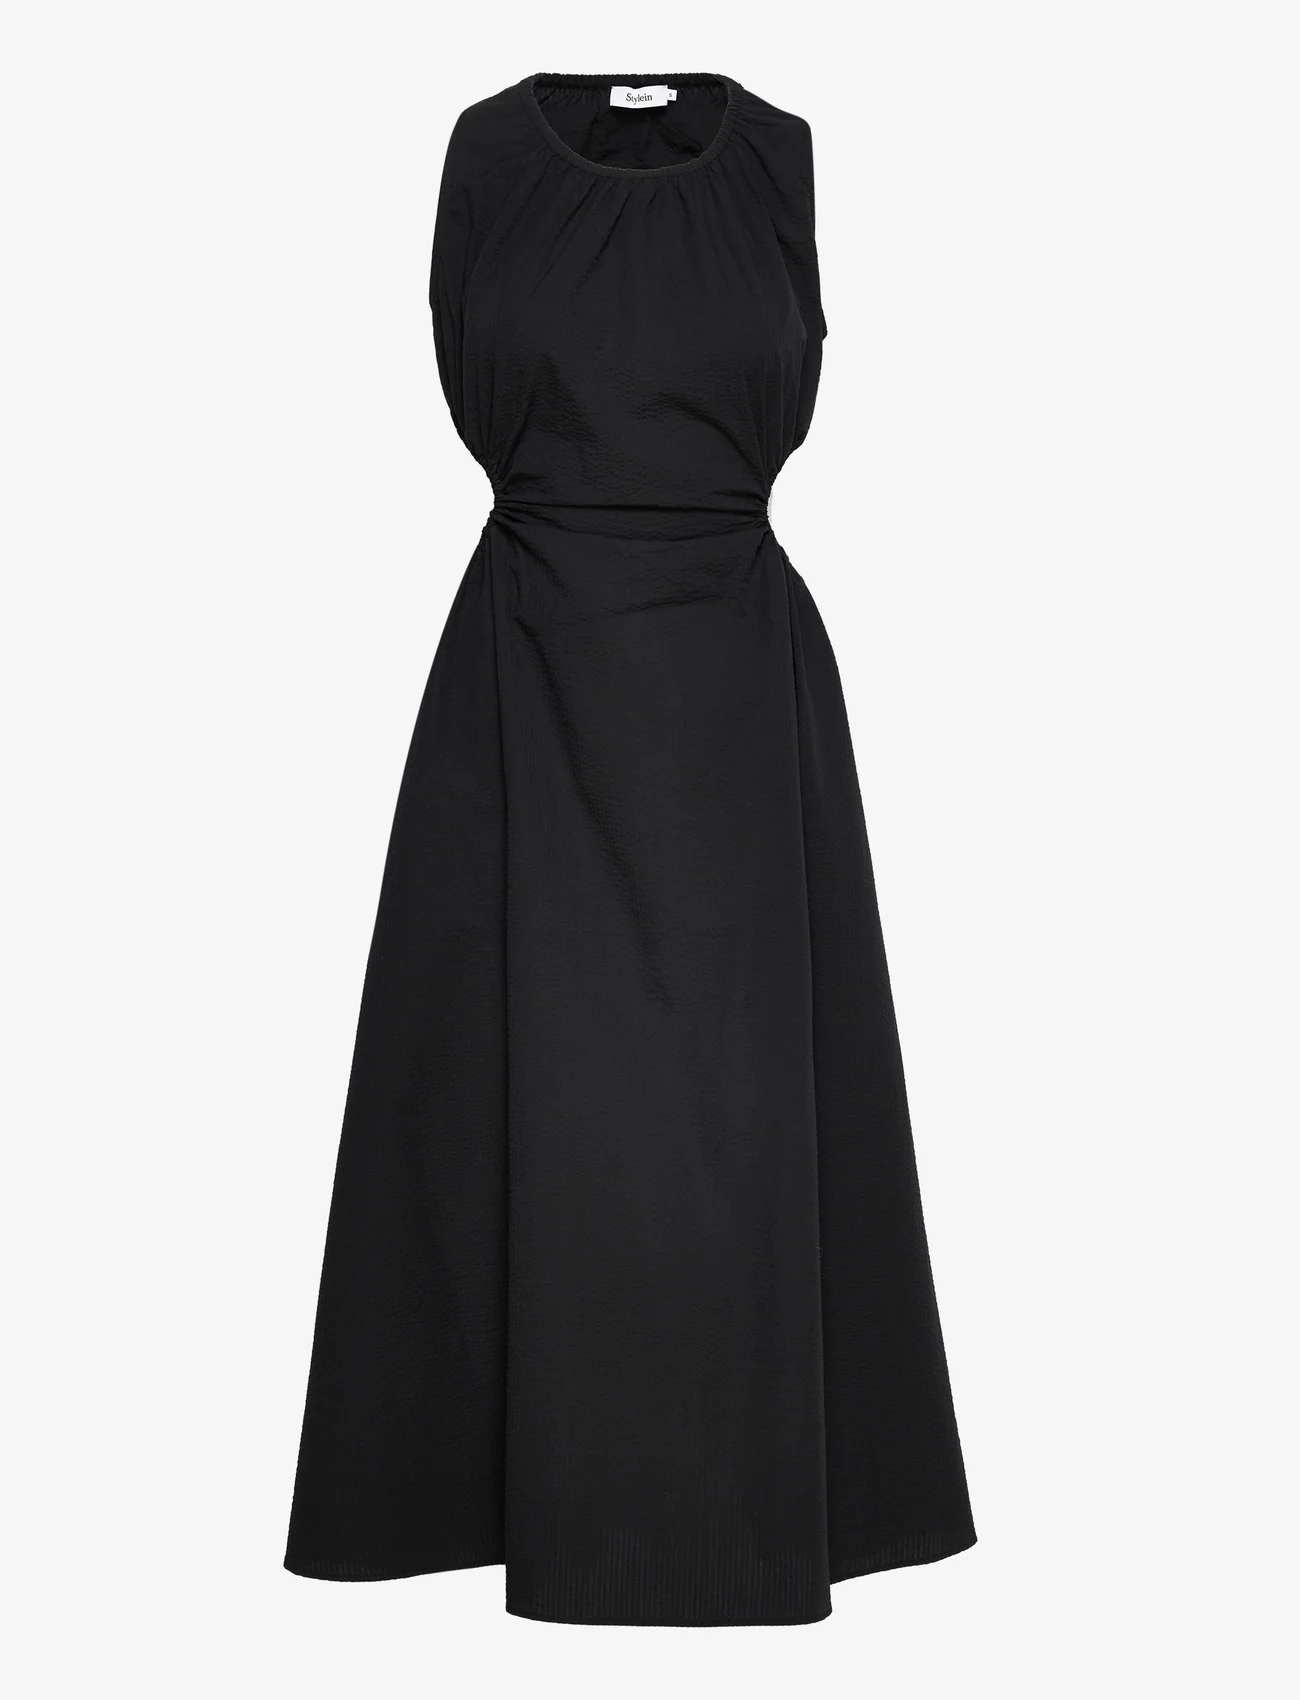 Stylein - MYTRA DRESS - ballīšu apģērbs par outlet cenām - black - 0